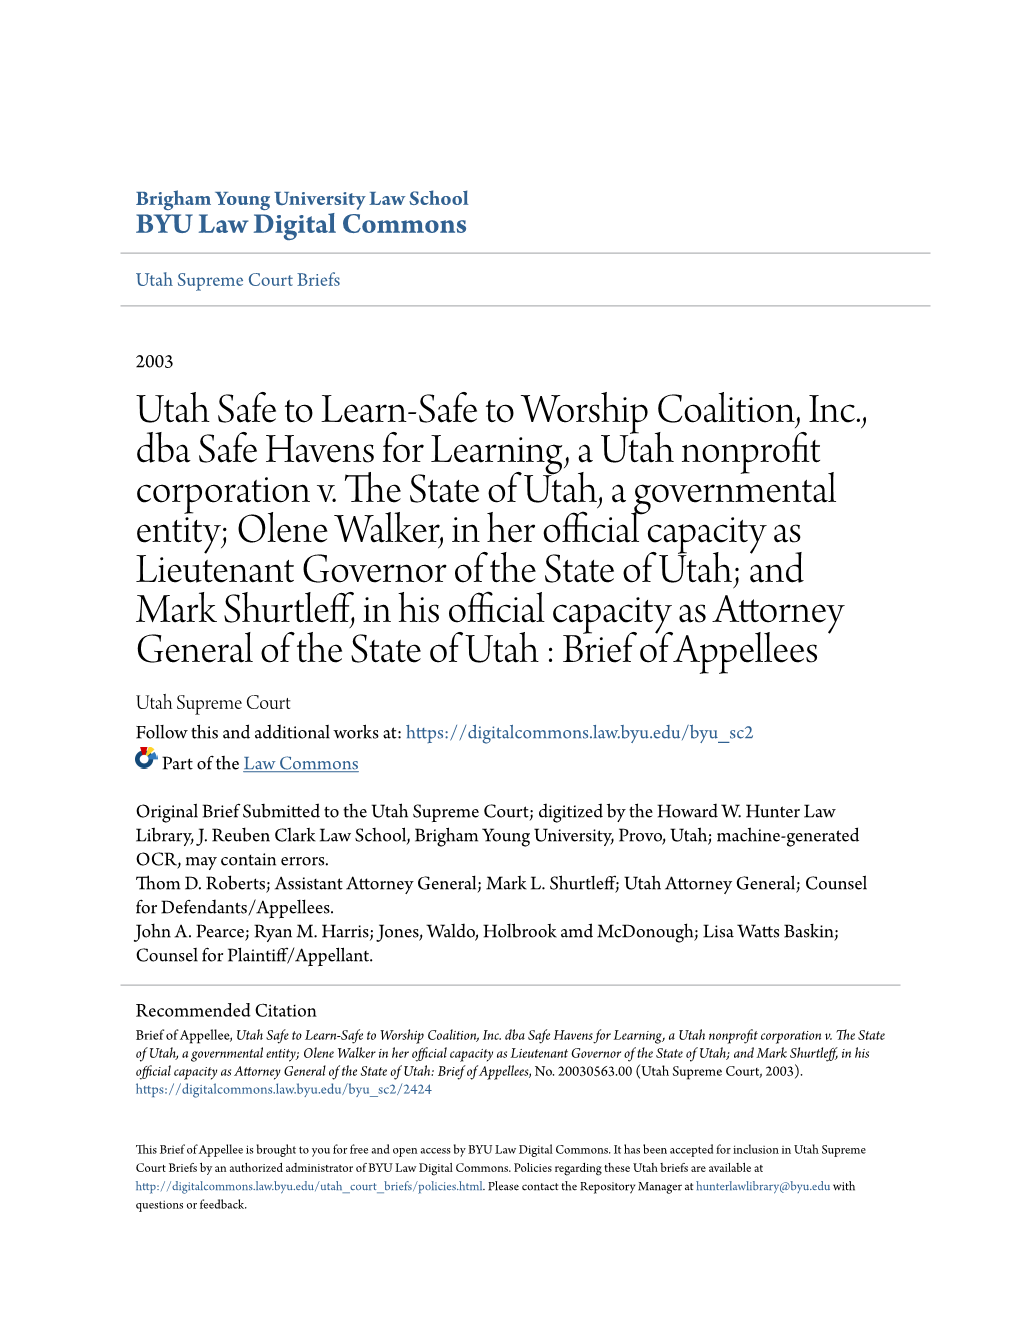 Utah Safe to Learn-Safe to Worship Coalition, Inc., Dba Safe Havens for Learning, a Utah Nonprofit Corporation V